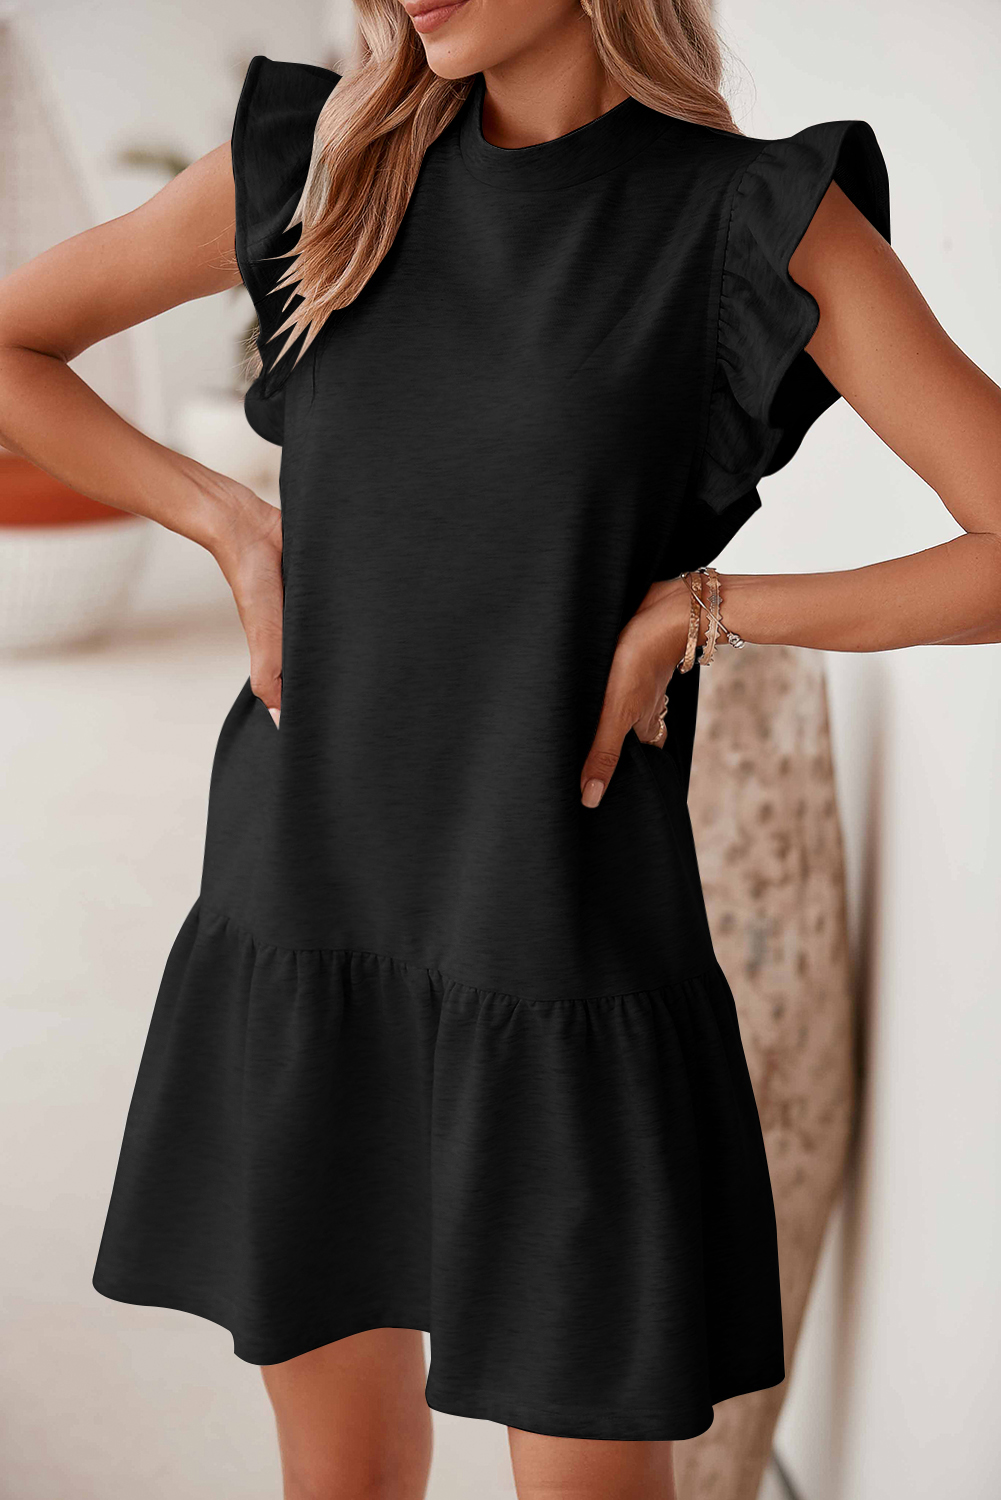 Shewin Wholesale Dropshipping Black Solid Color Ruffle Hem Mini SWEATSHIRT Dress